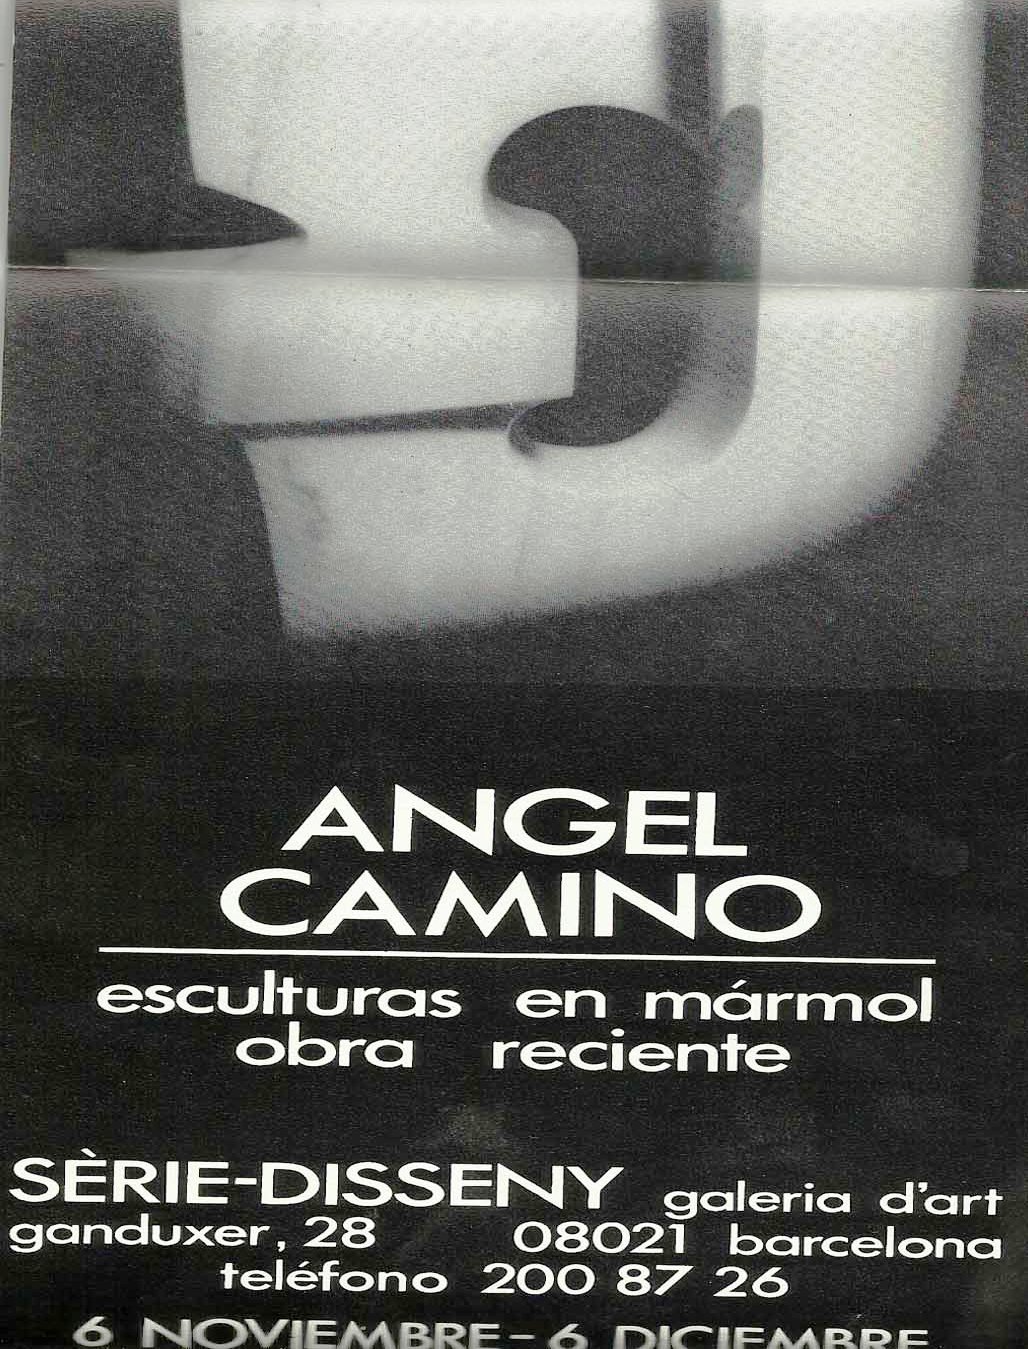 1995-Sèrie disseny-Barcelona